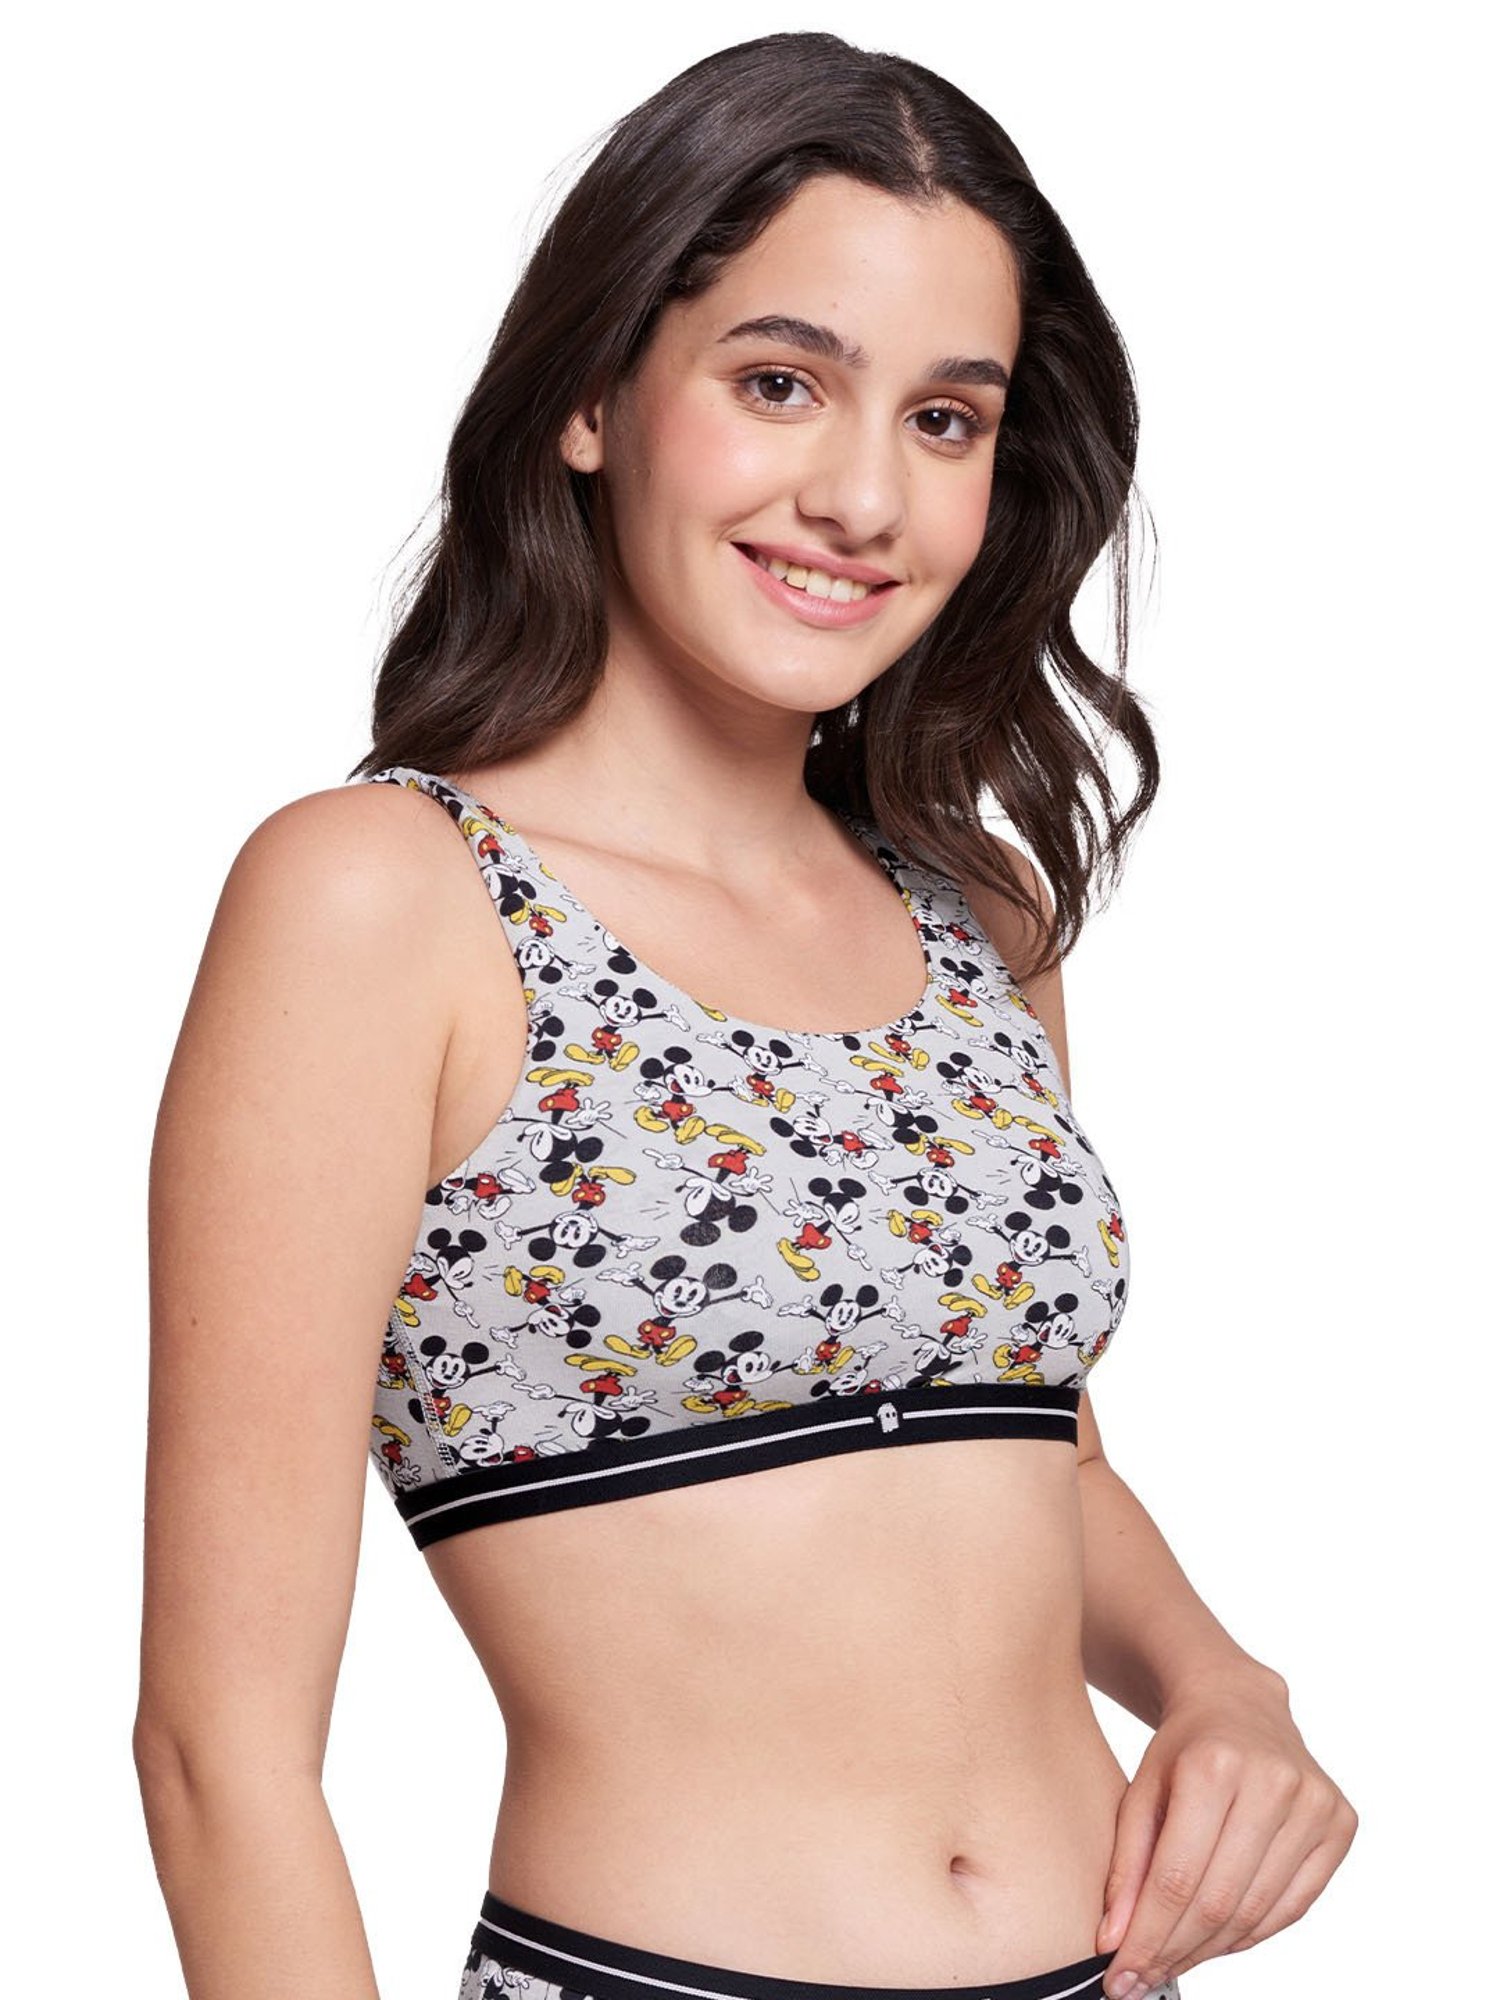 Natick Mall - Embrace a new bra destination with Soma's